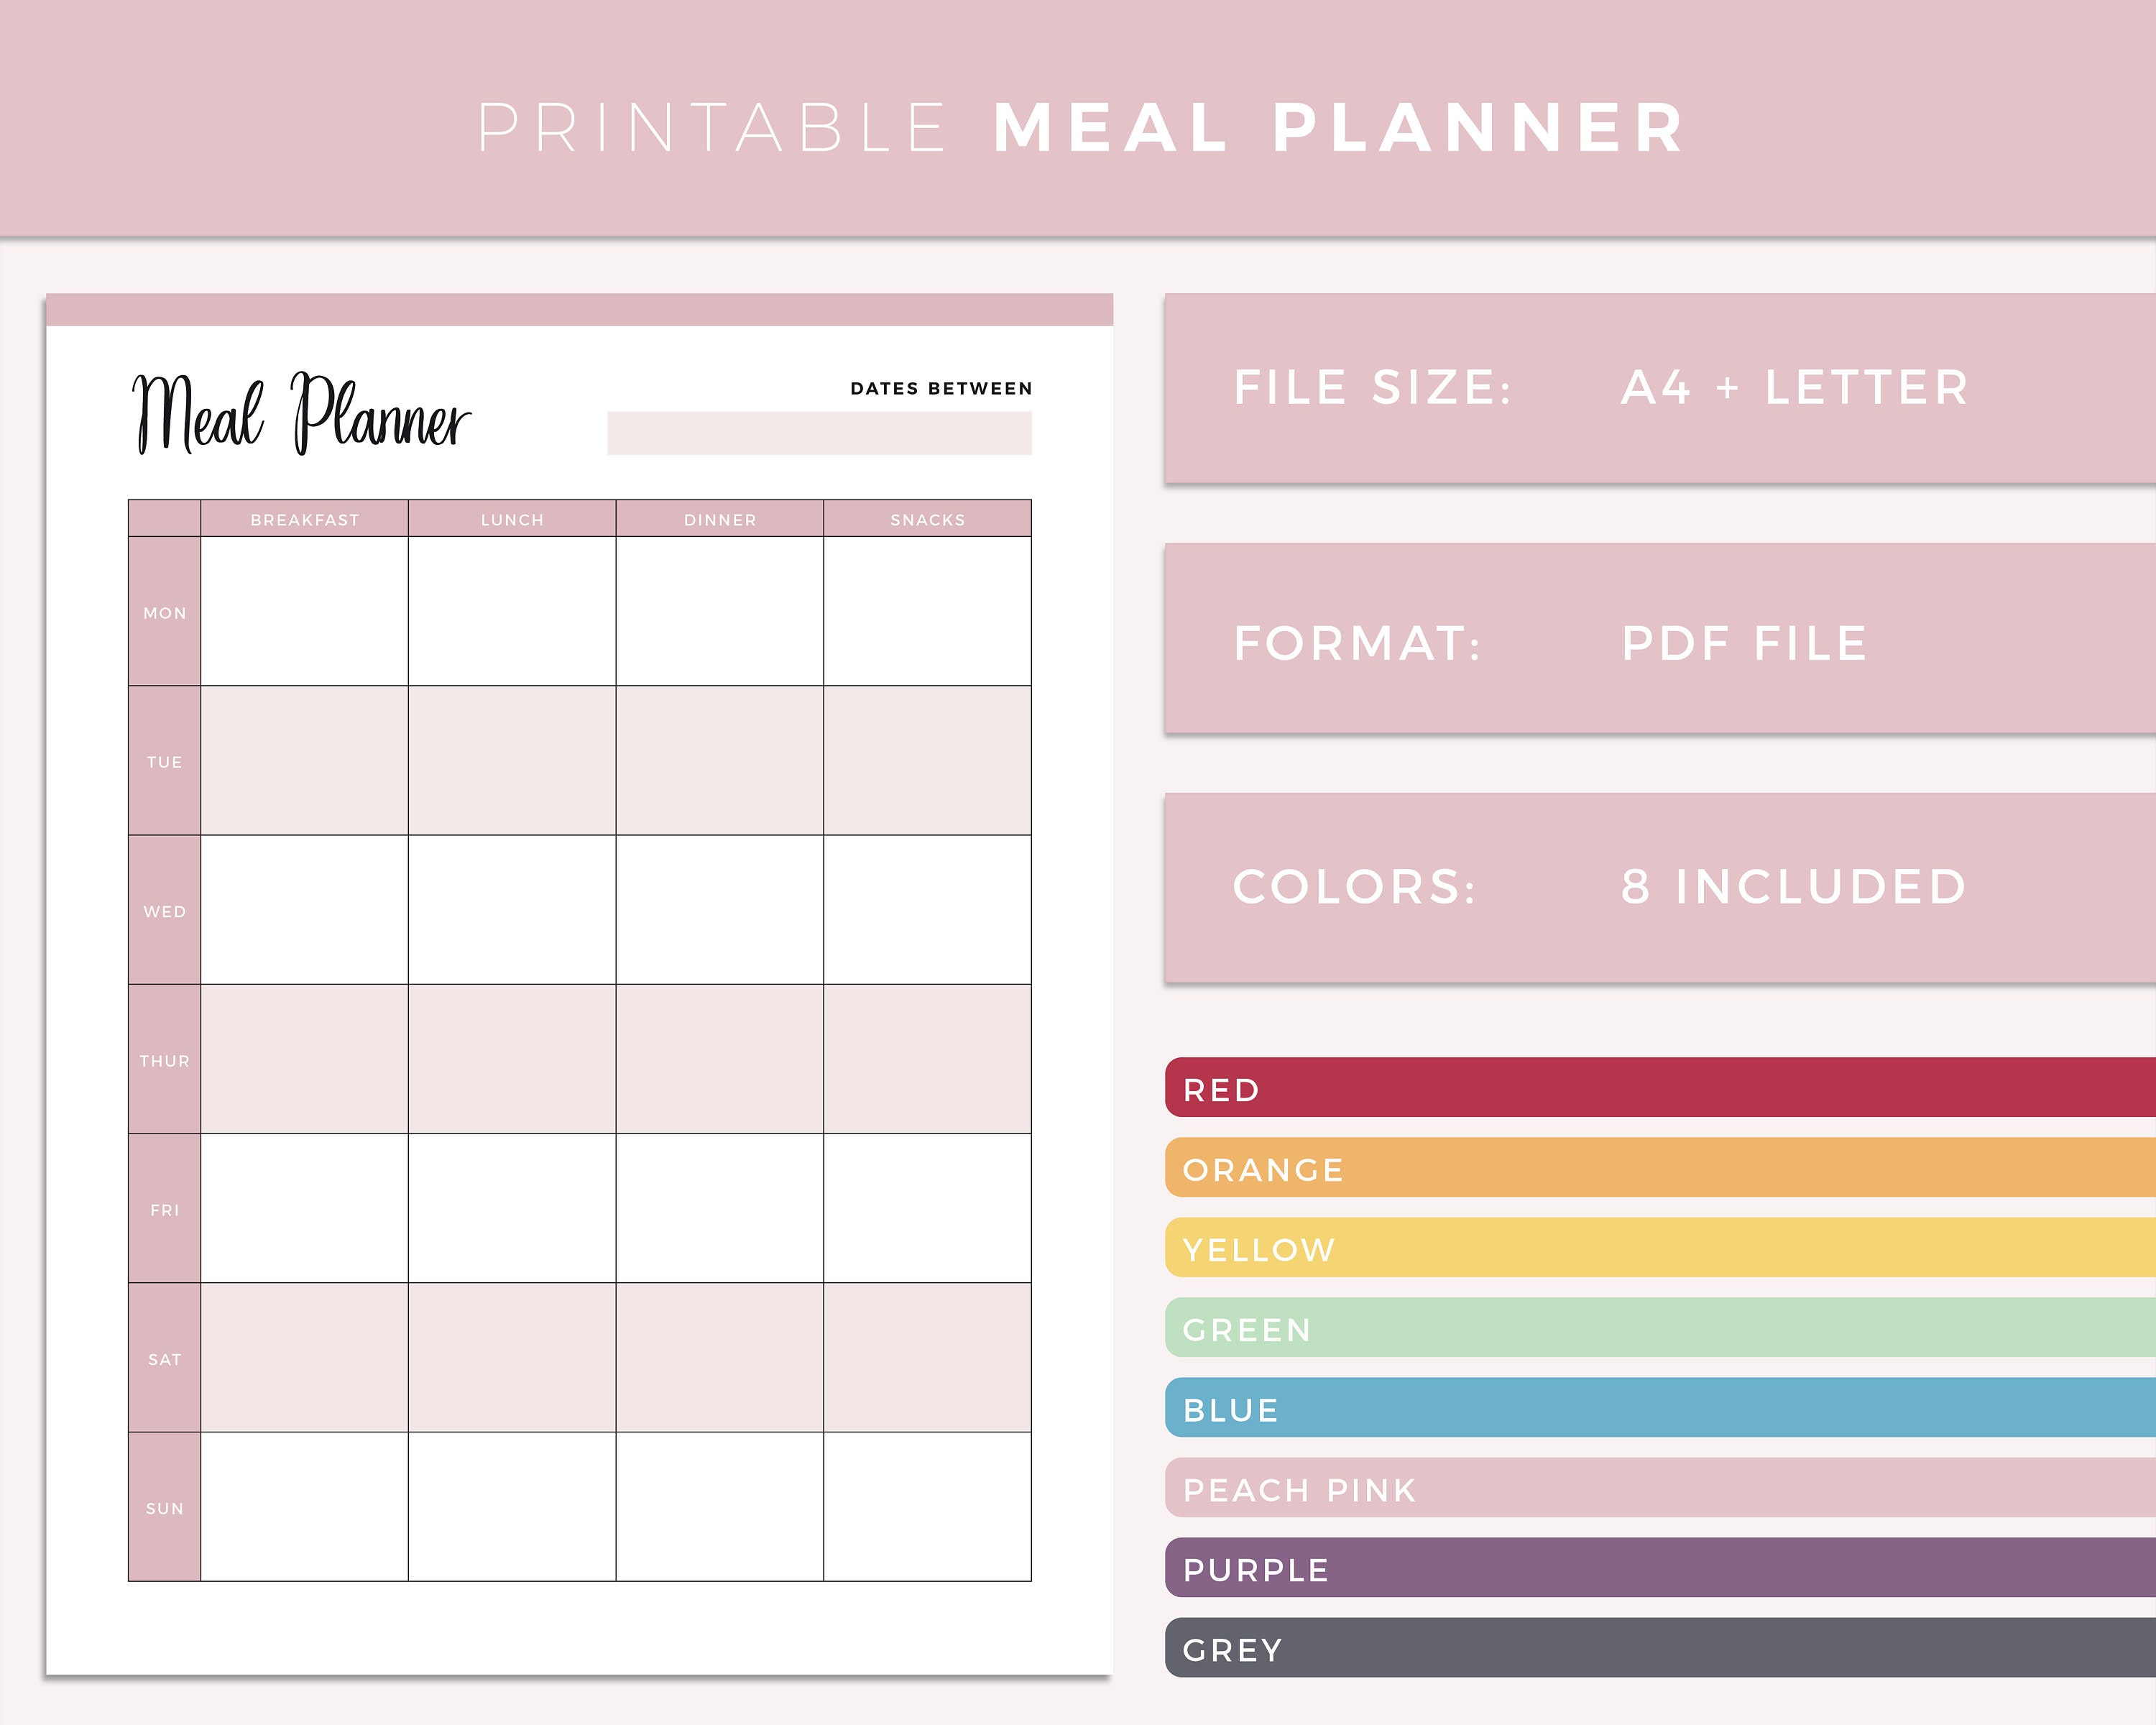 Printable Meal Planner Print at Home Weekly Meal Prep Journal - Etsy